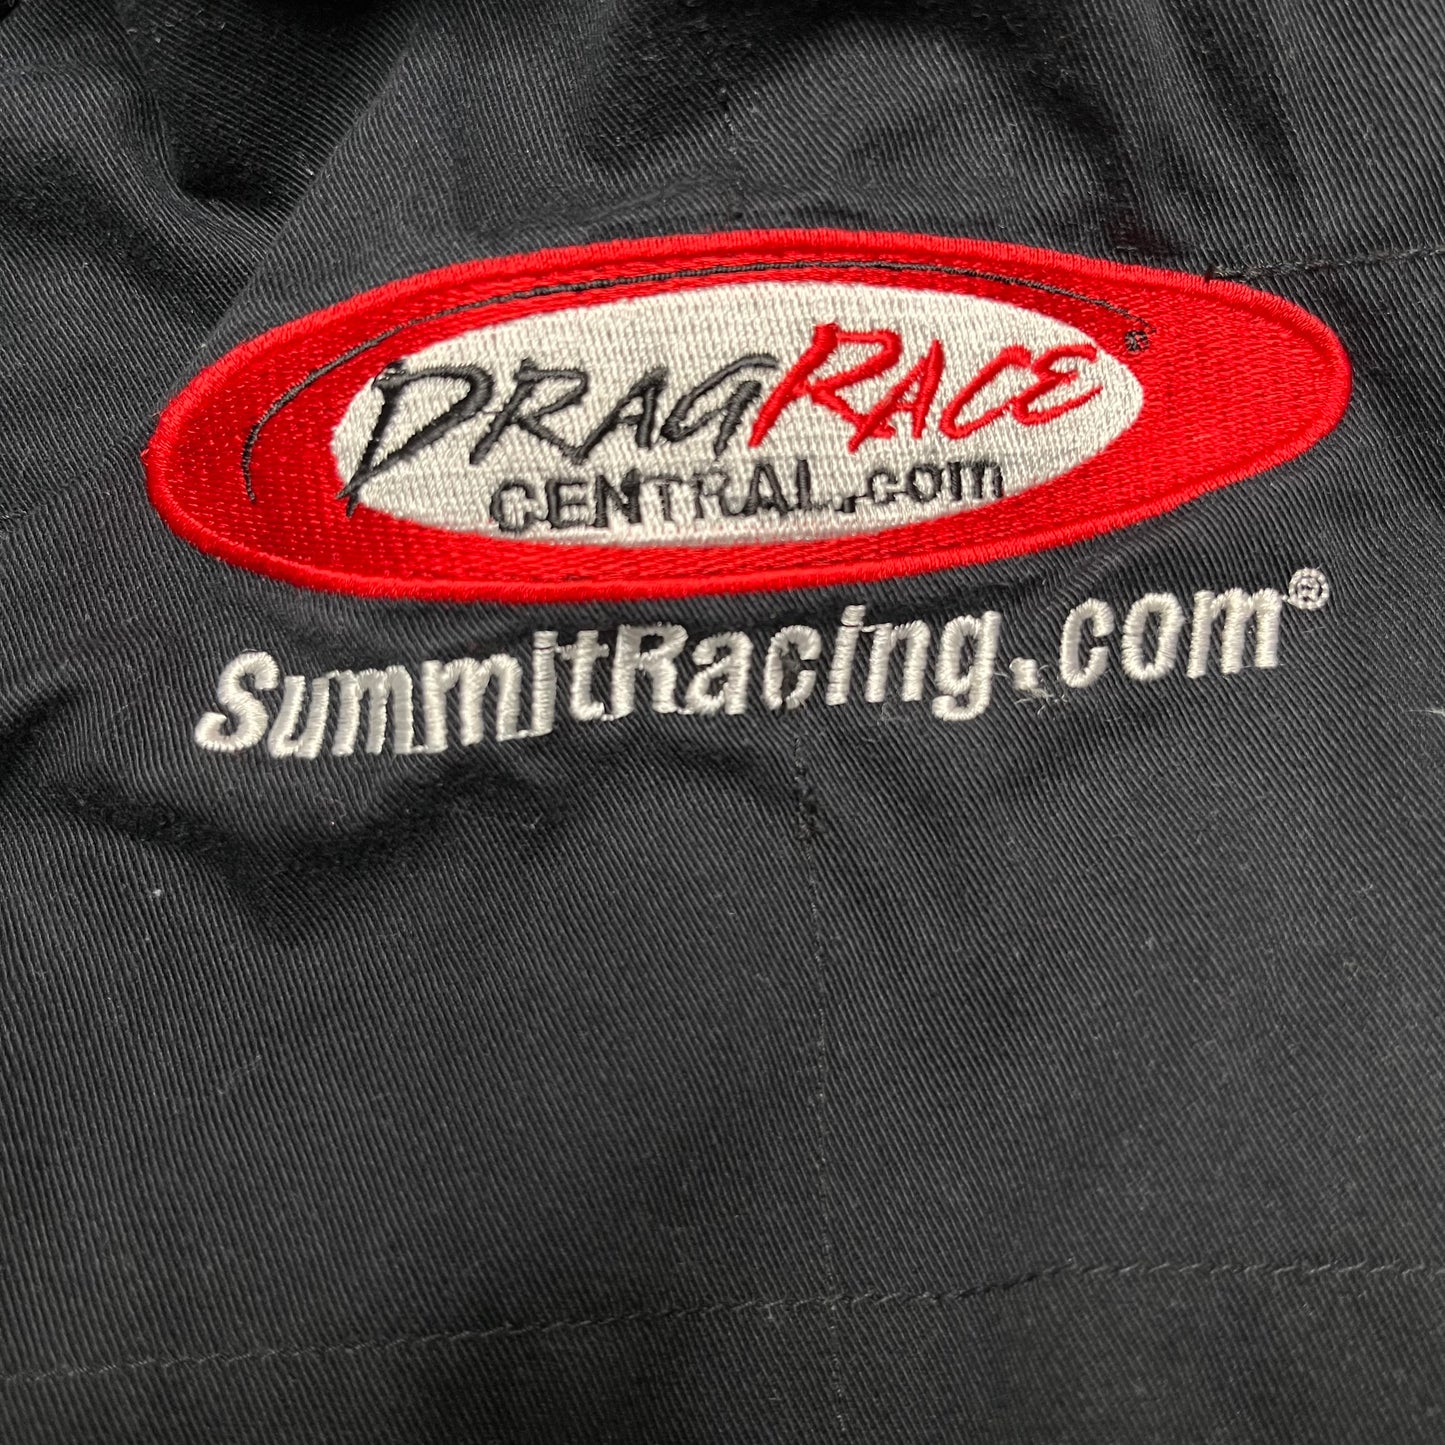 90s Summit Racing Jacket (M)